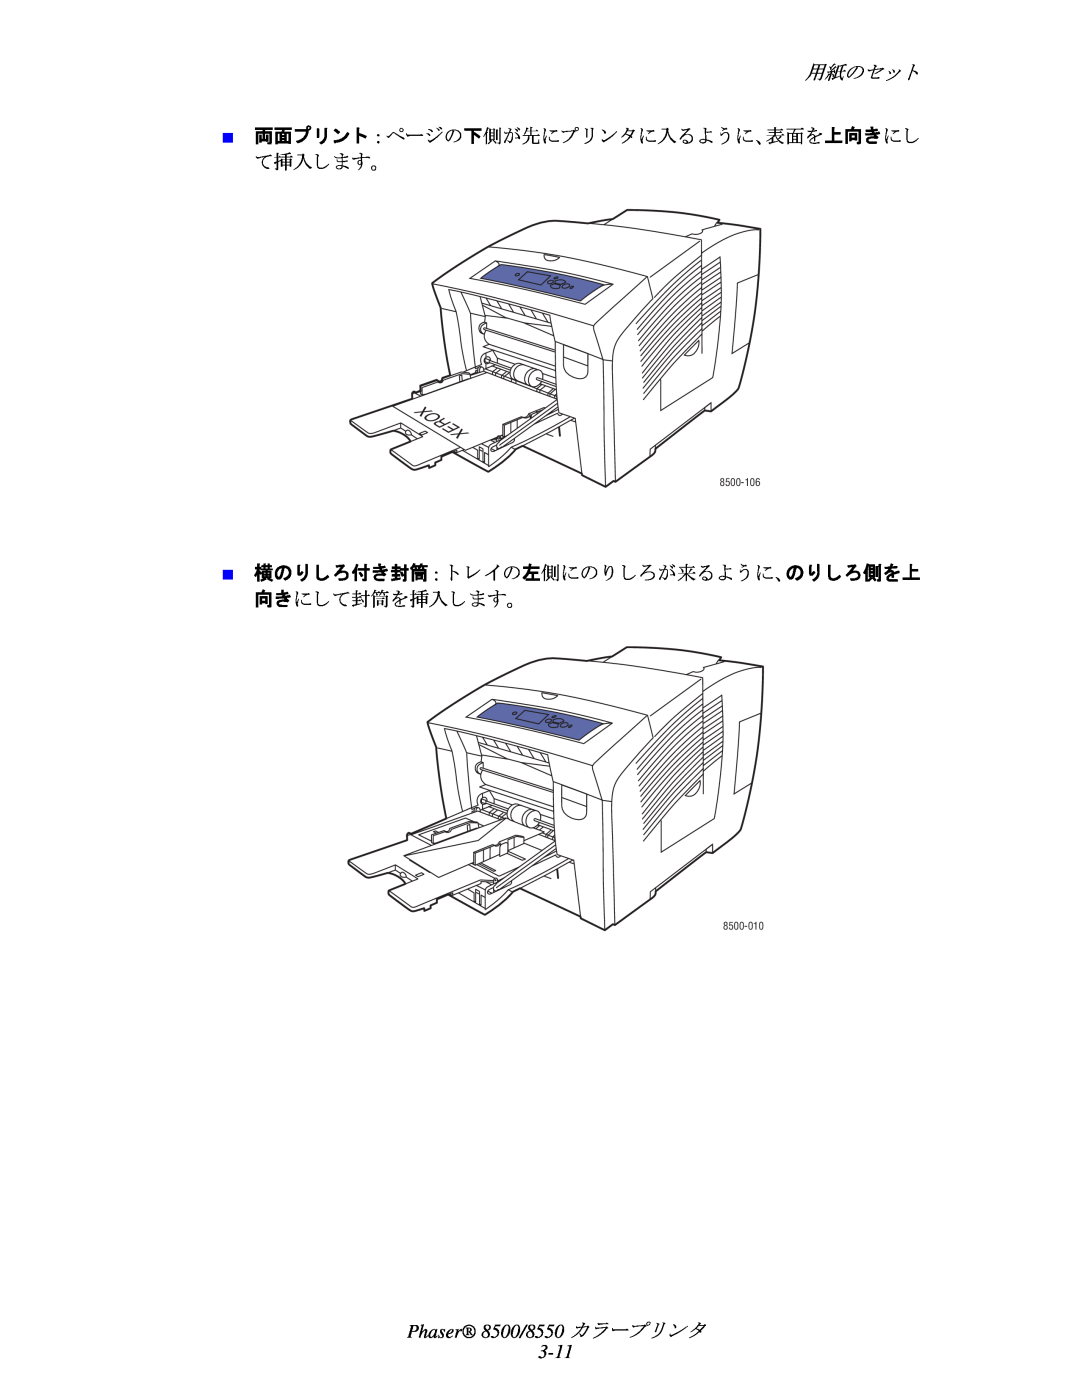 Xerox manual 用紙のセ ッ ト, Phaser 8500/8550 カ ラープ リ ン タ 3-11 